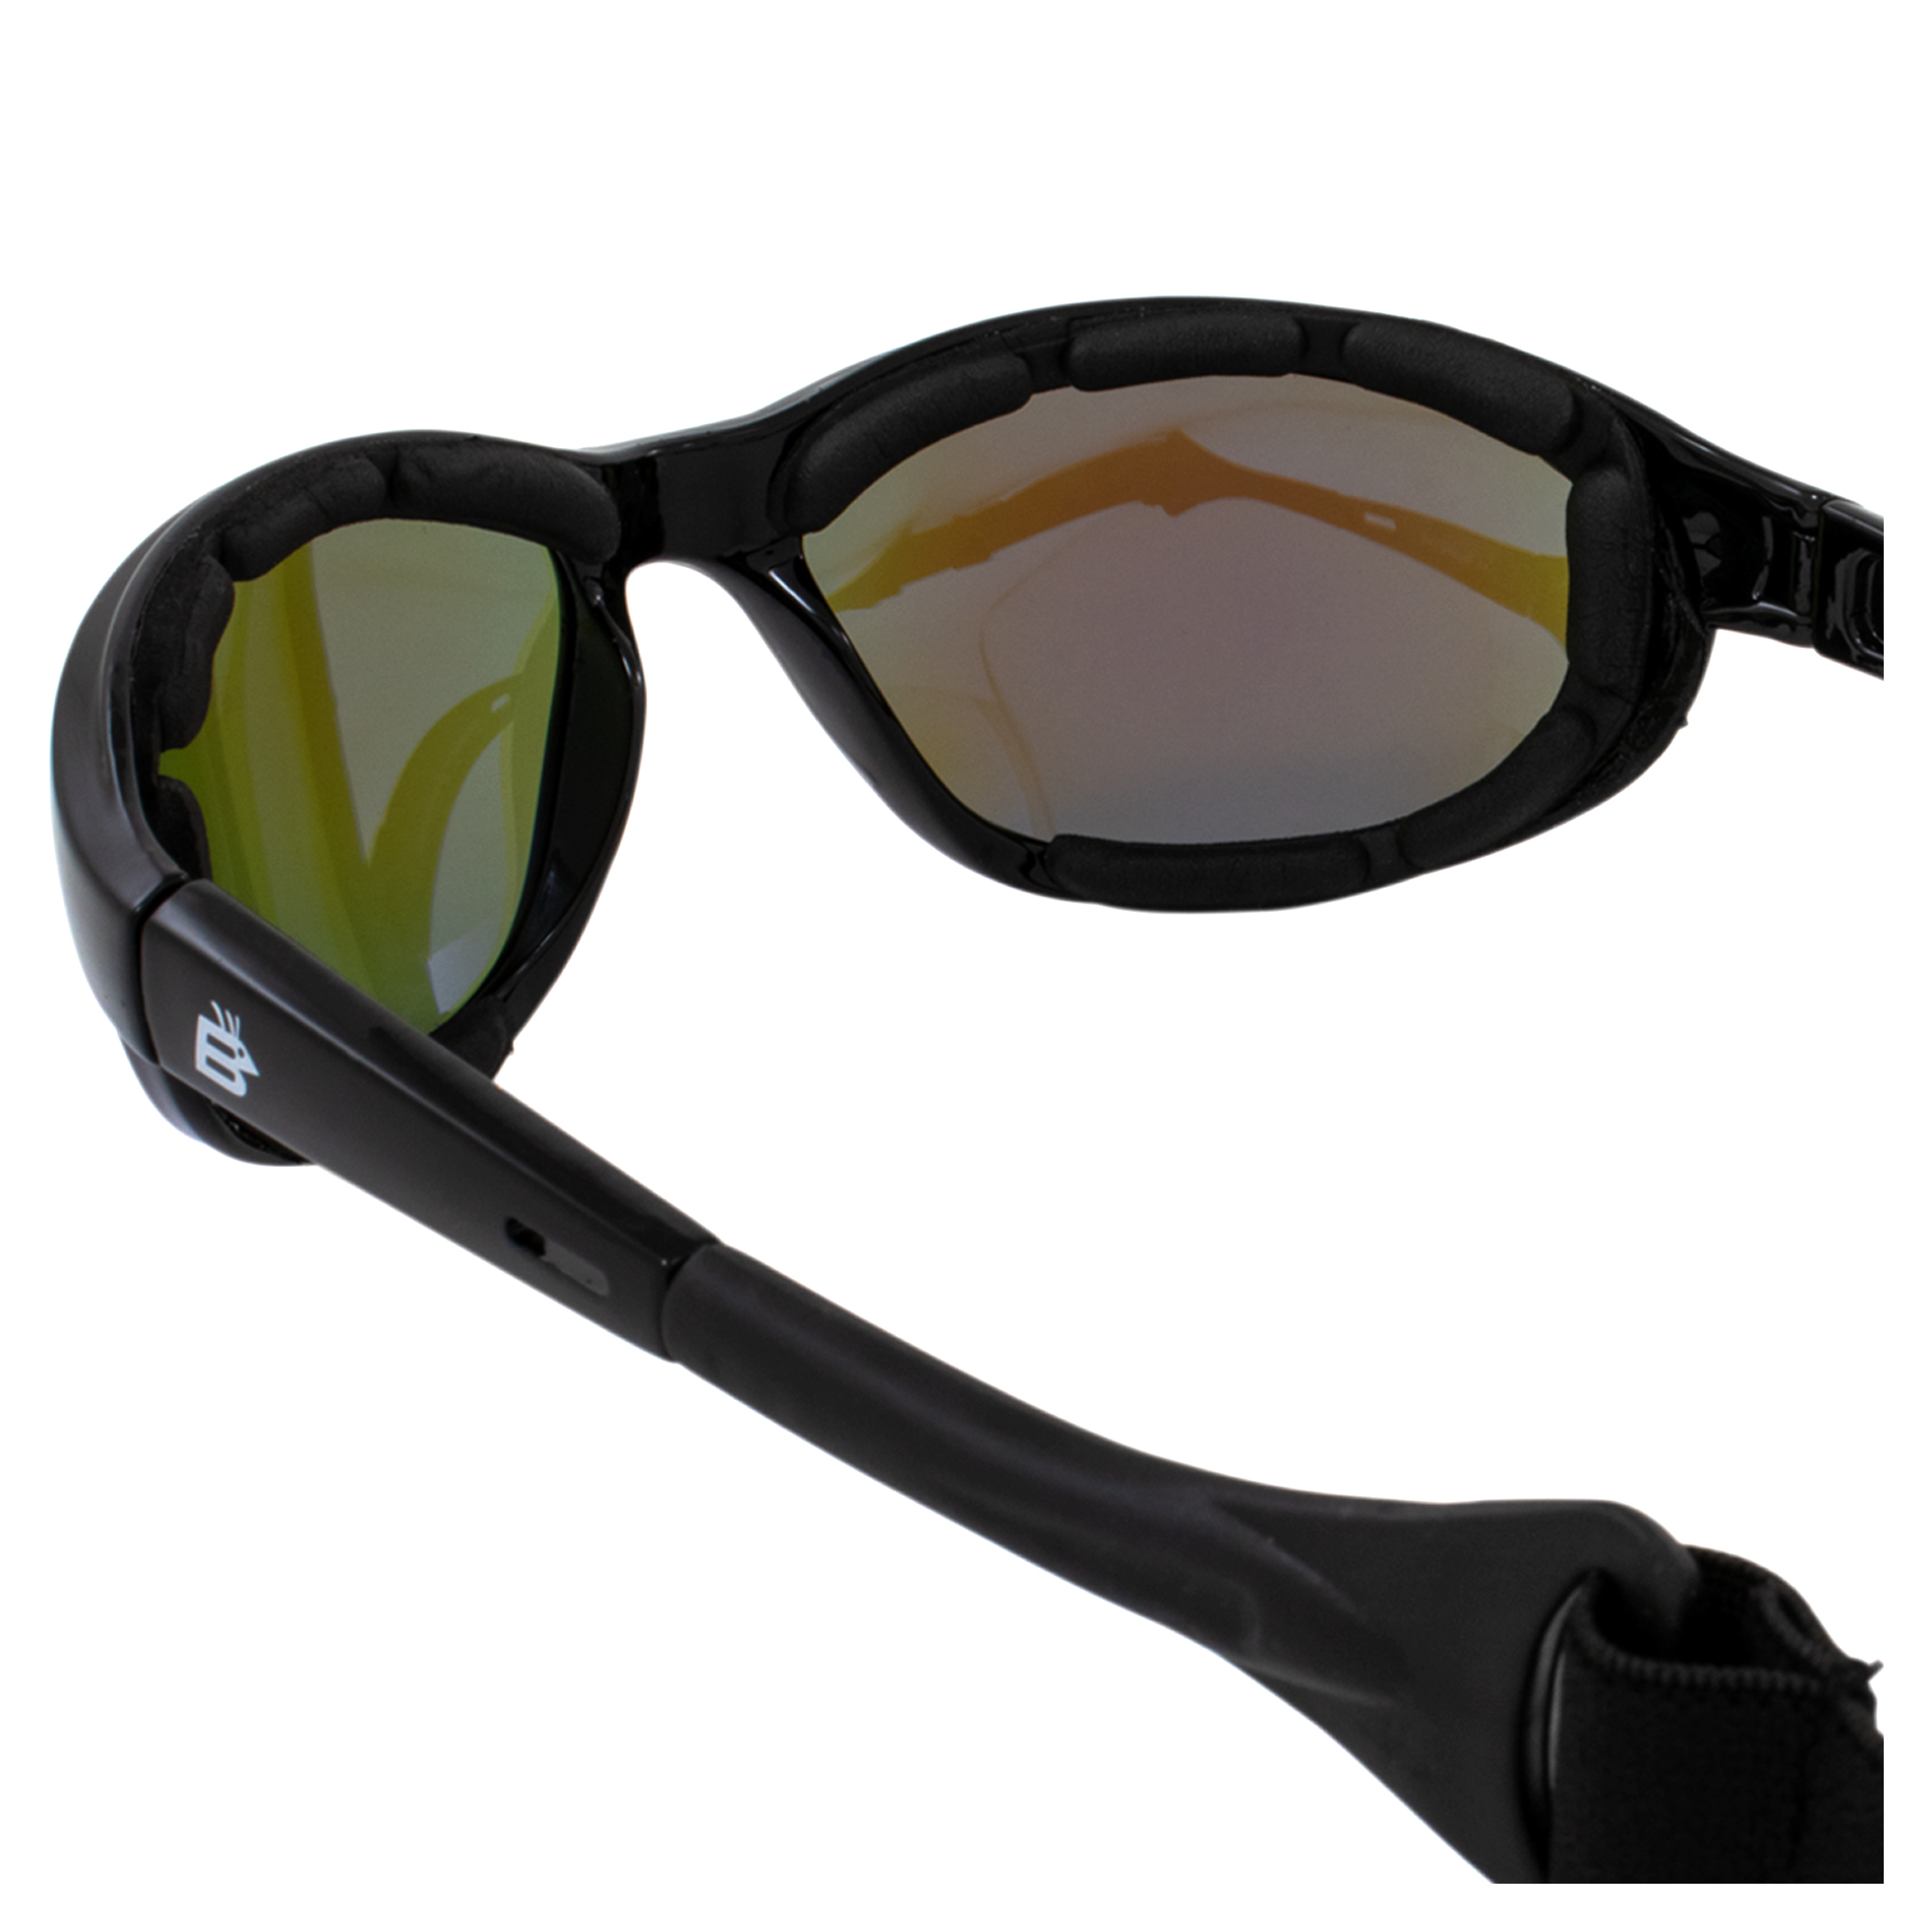 Birdz Eyewear Sail Padded Jetski Sunglasses Goggles Polarized Sports Watersports Boating Fishing for Men or Women Black Frame w/Blue Mirror Lens - image 5 of 6